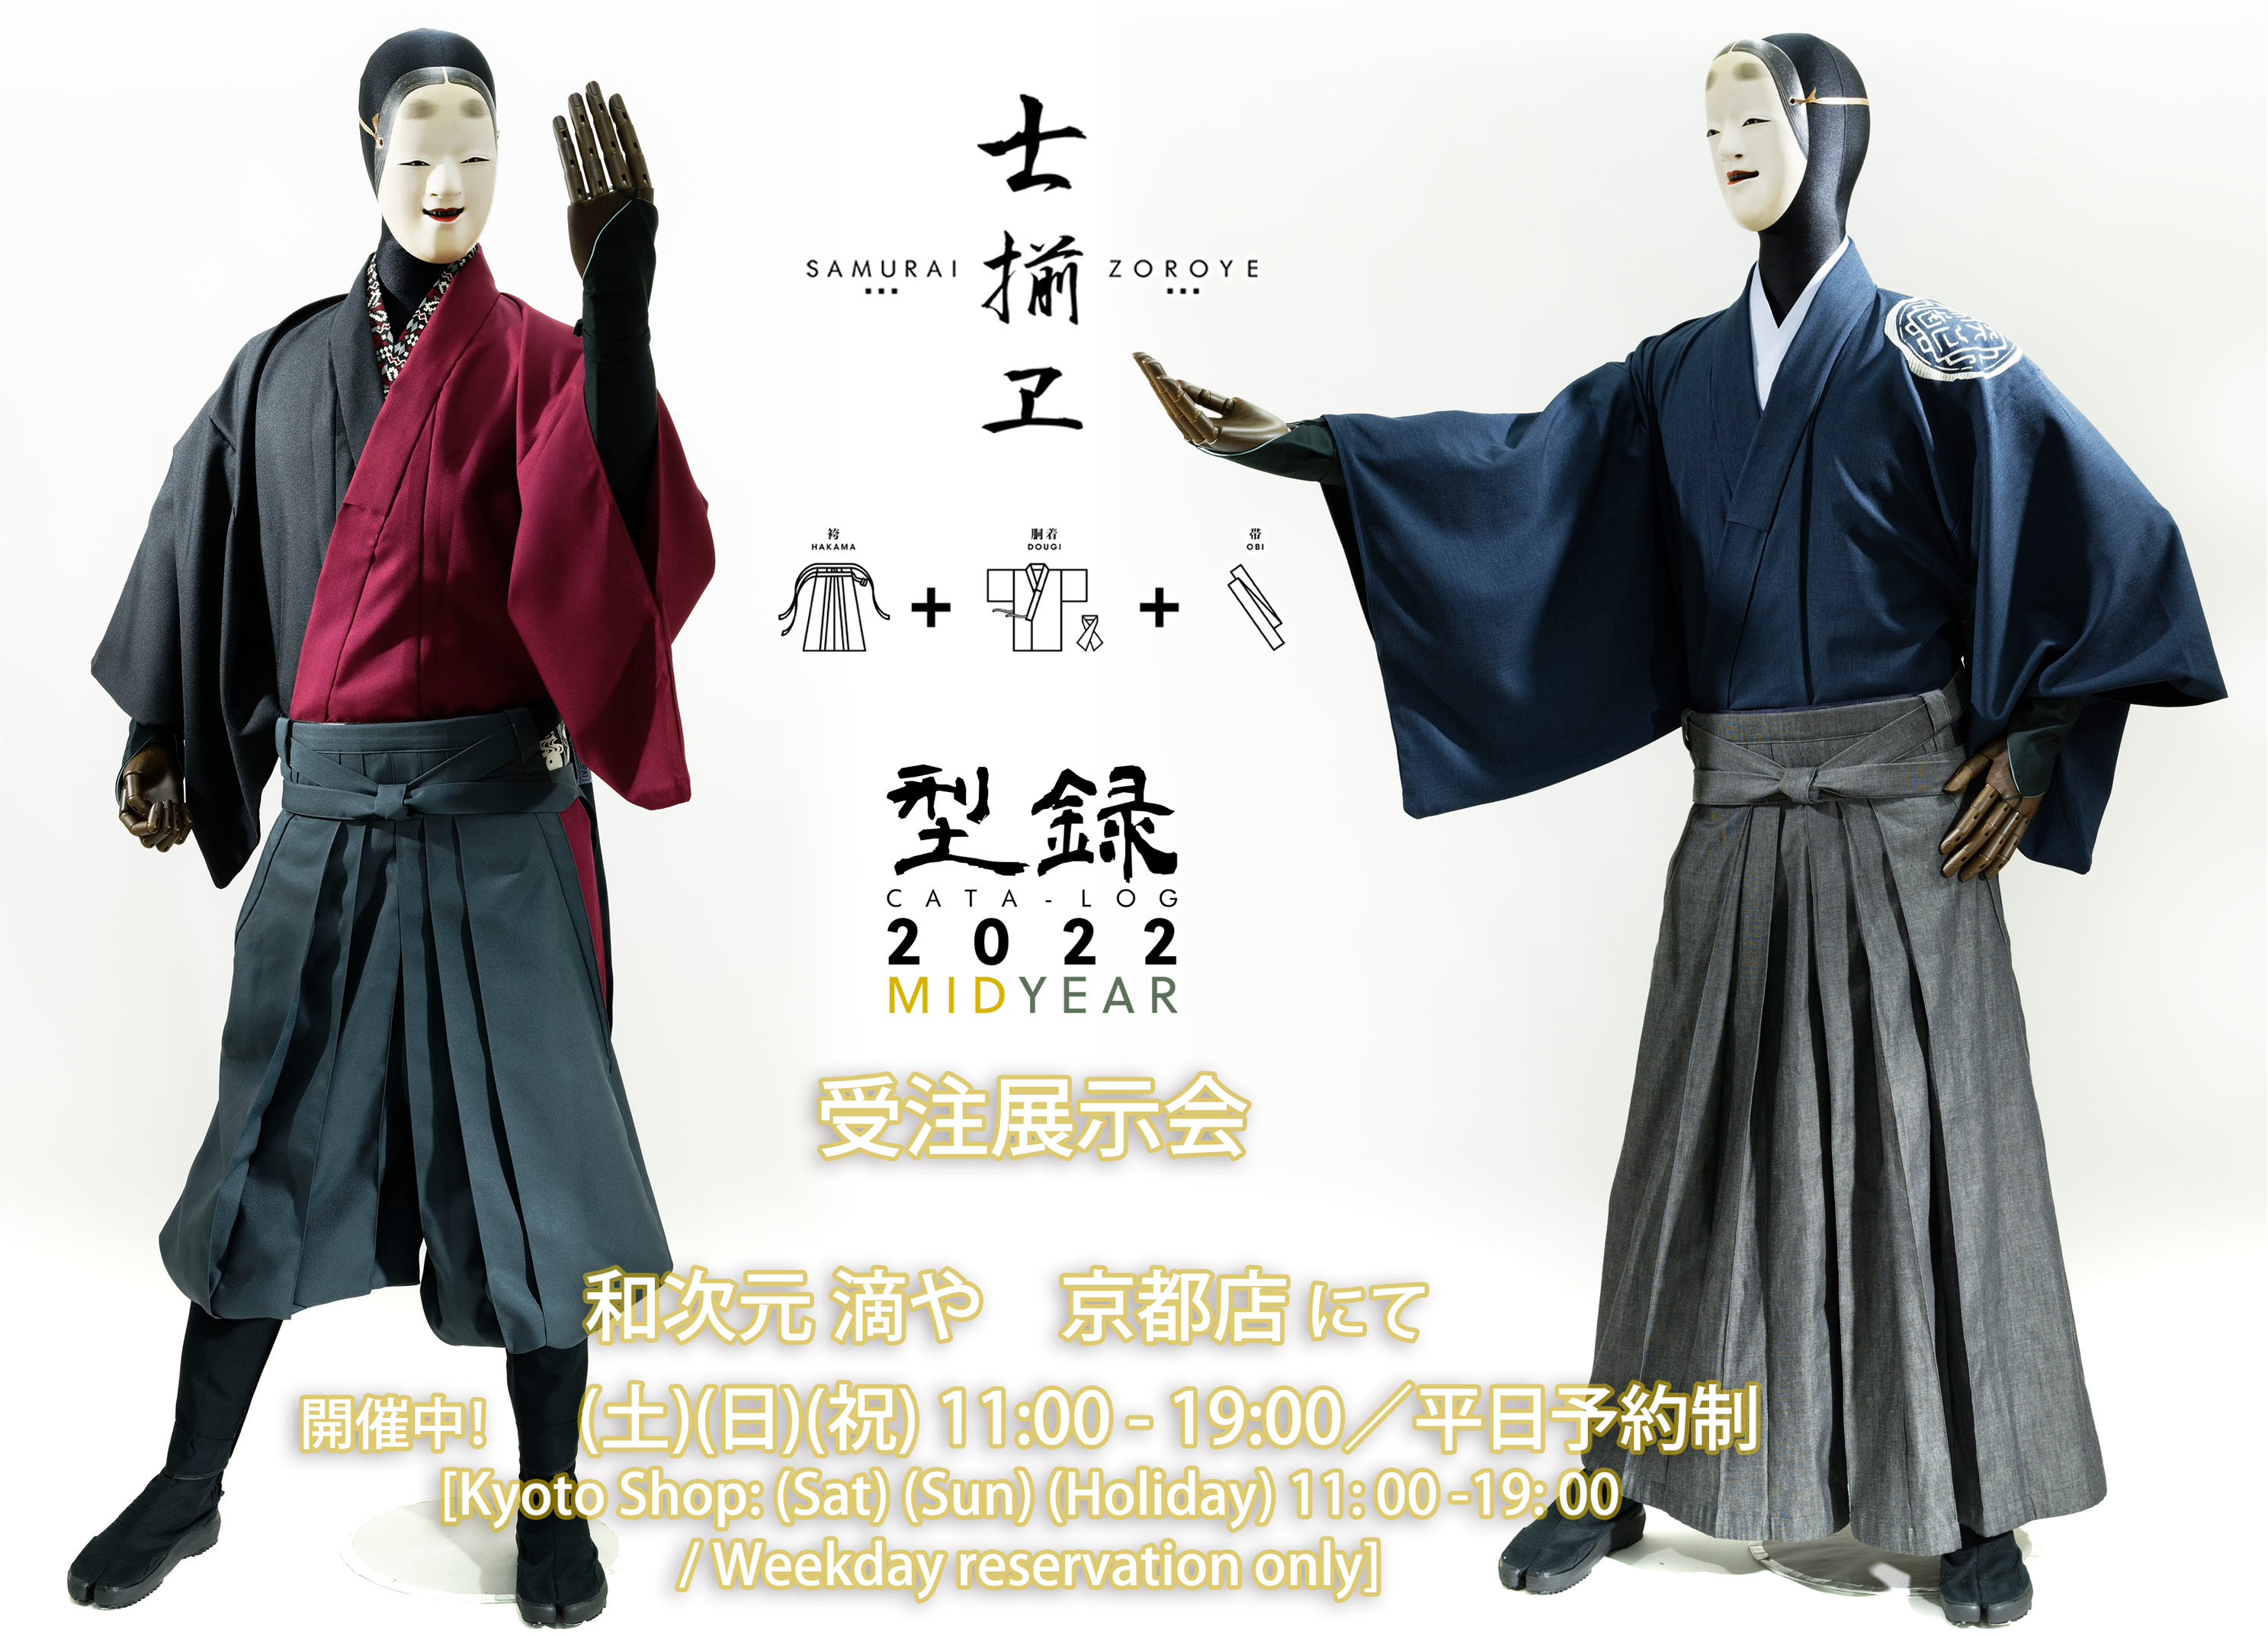 '22 MidYear [Samurai Zoroye] exhibition